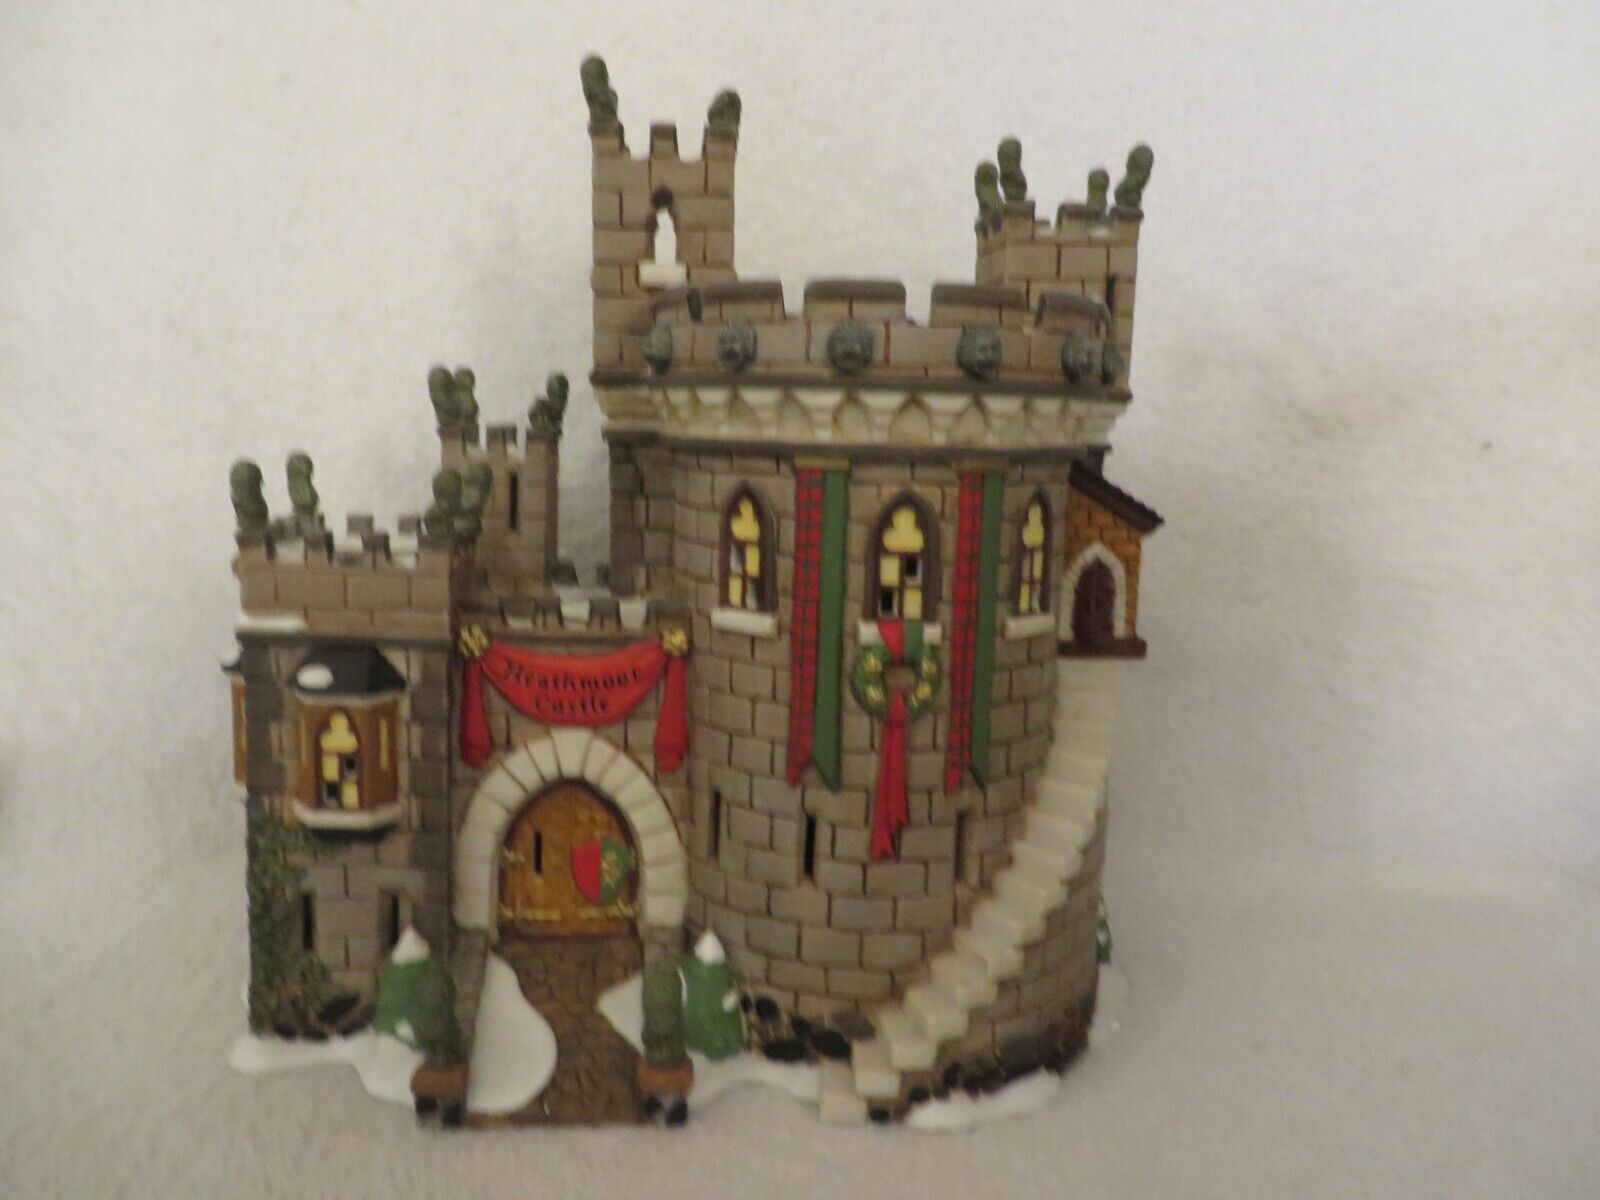 Dept 56 Dickens Village Heathmoor Castle Boxed 1991 Limited Edition Christmas